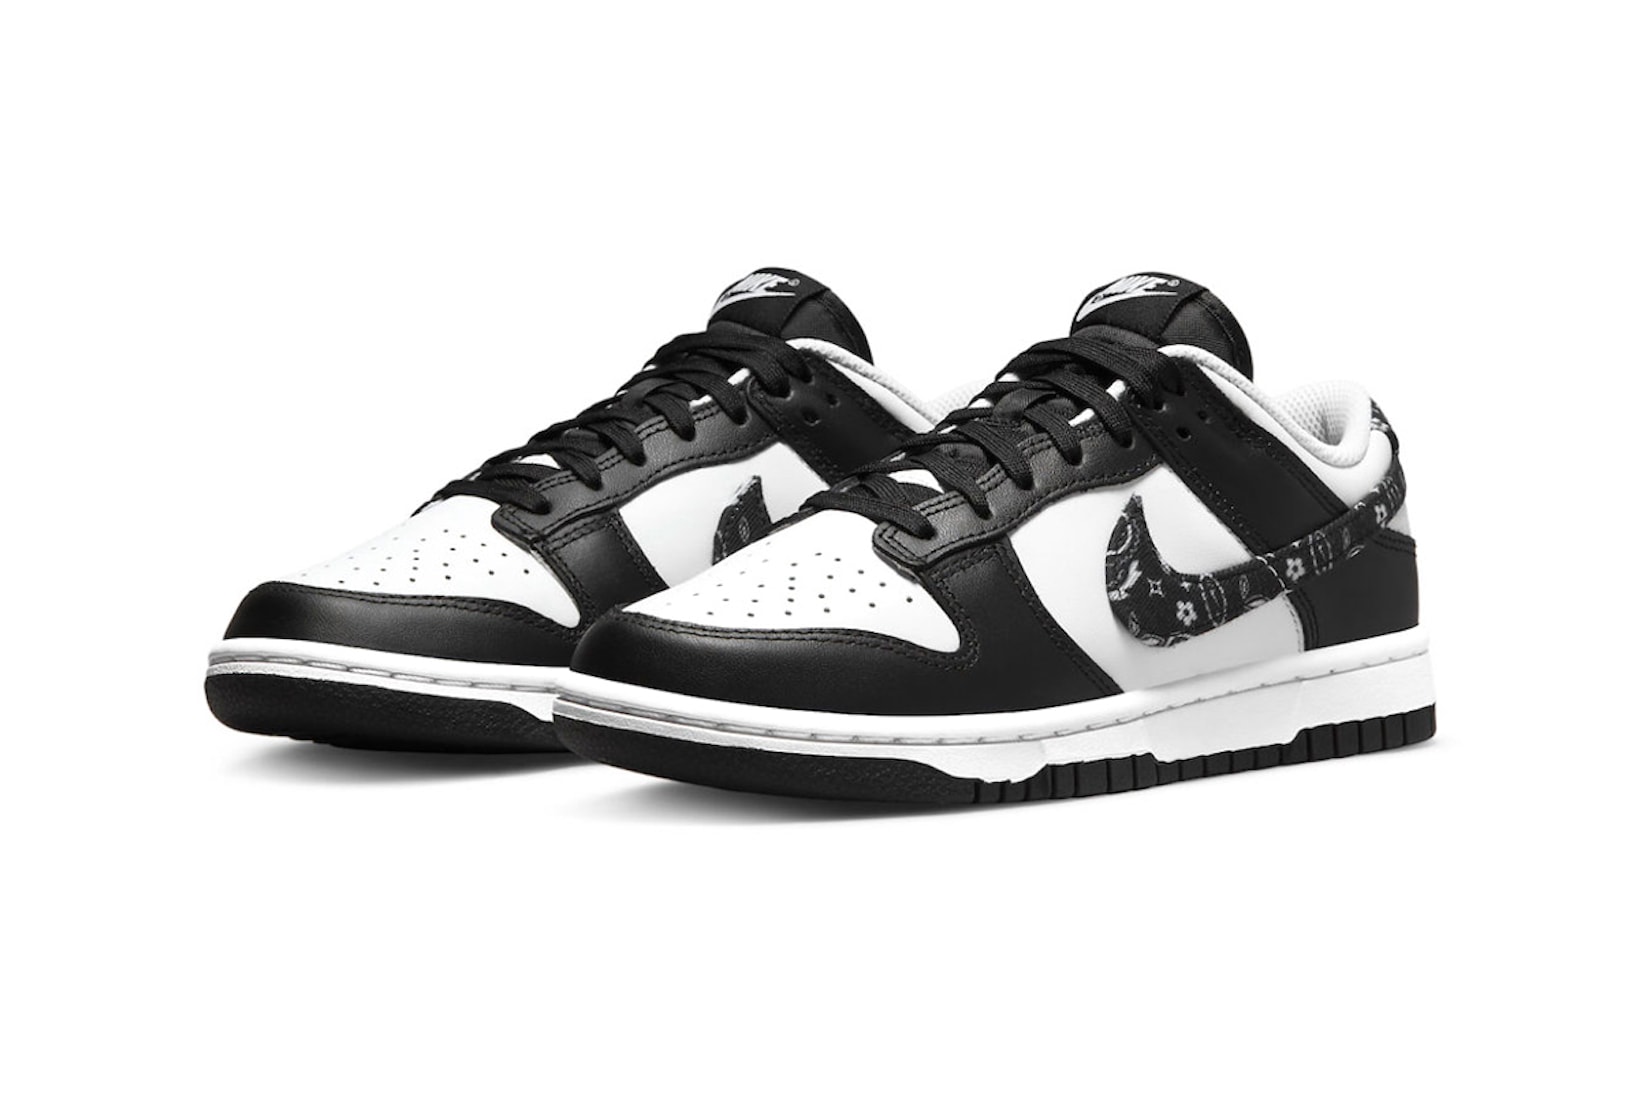 Nike Dunk Low Black White Paisley Sneakers Footwear Shoes Kicks Lateral